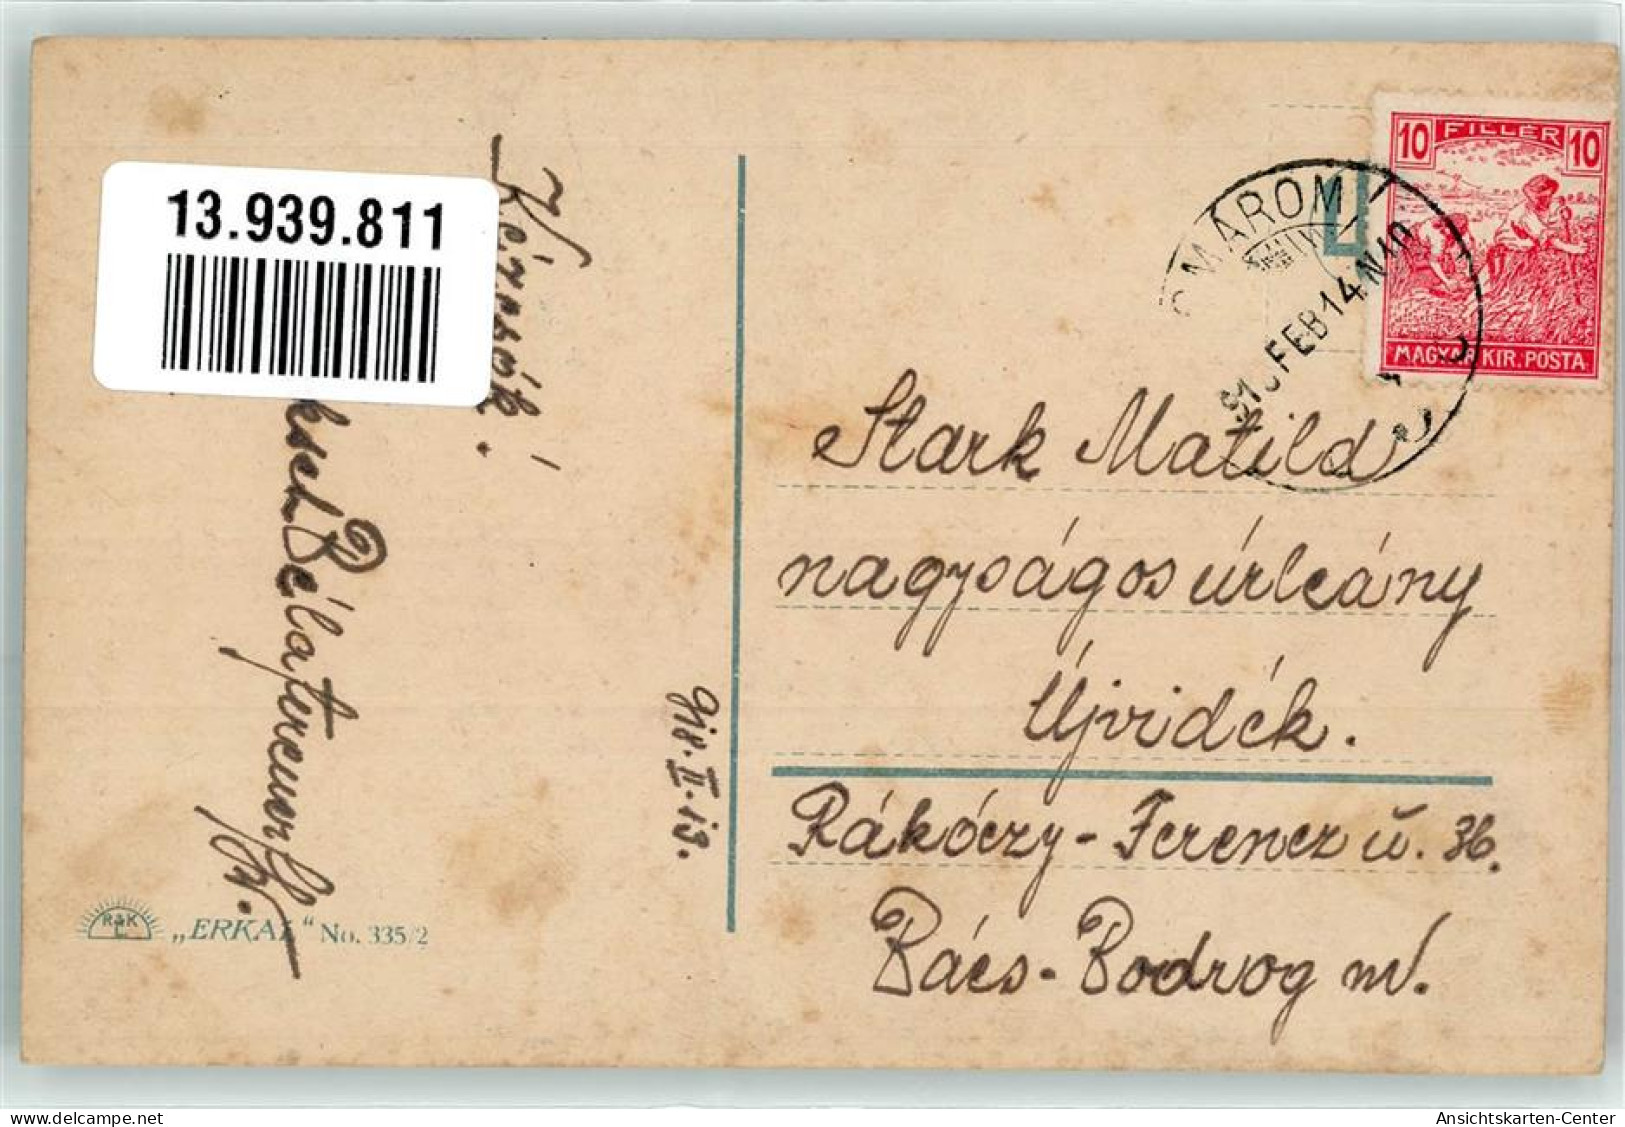 13939811 - Mia May Verlag Erkal Serie 335-2 - Usabal